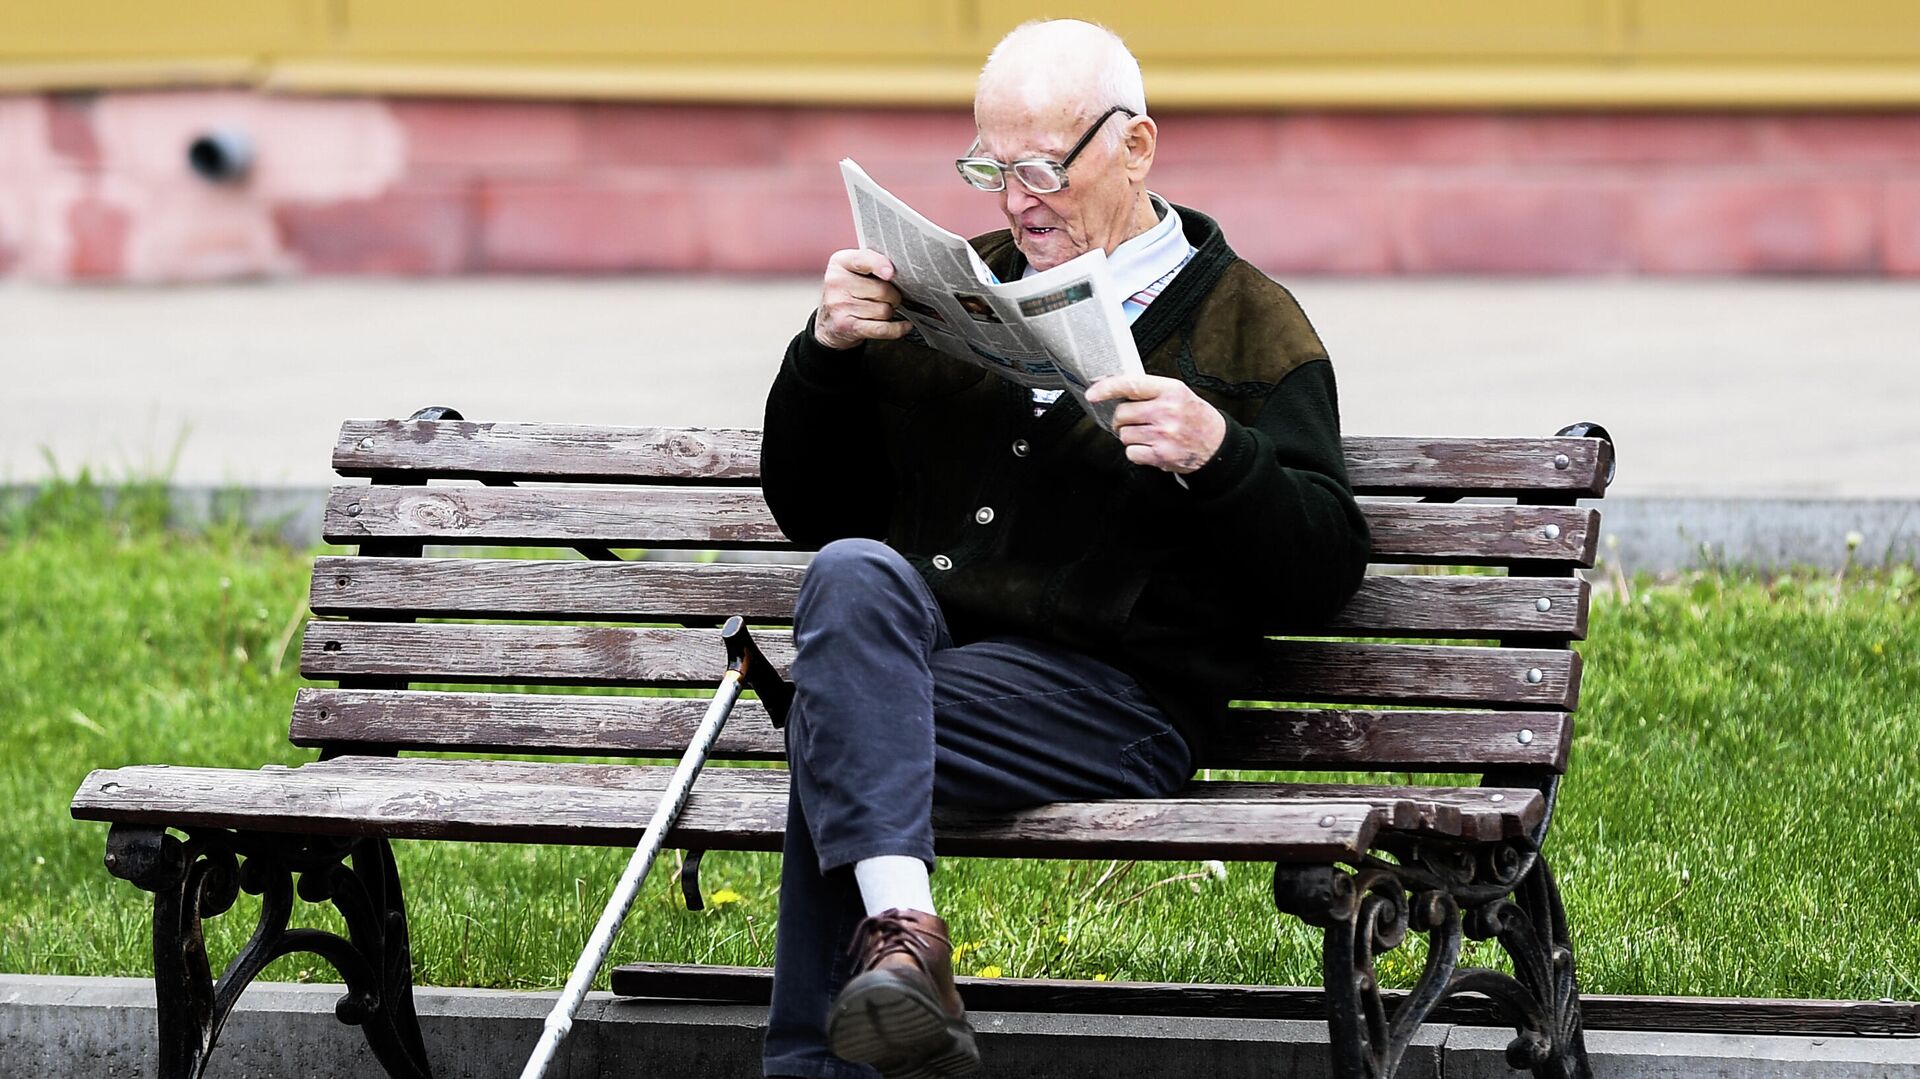 Мужчина читает газету на улице на лавочке в Москве  - РИА Новости, 1920, 31.10.2021